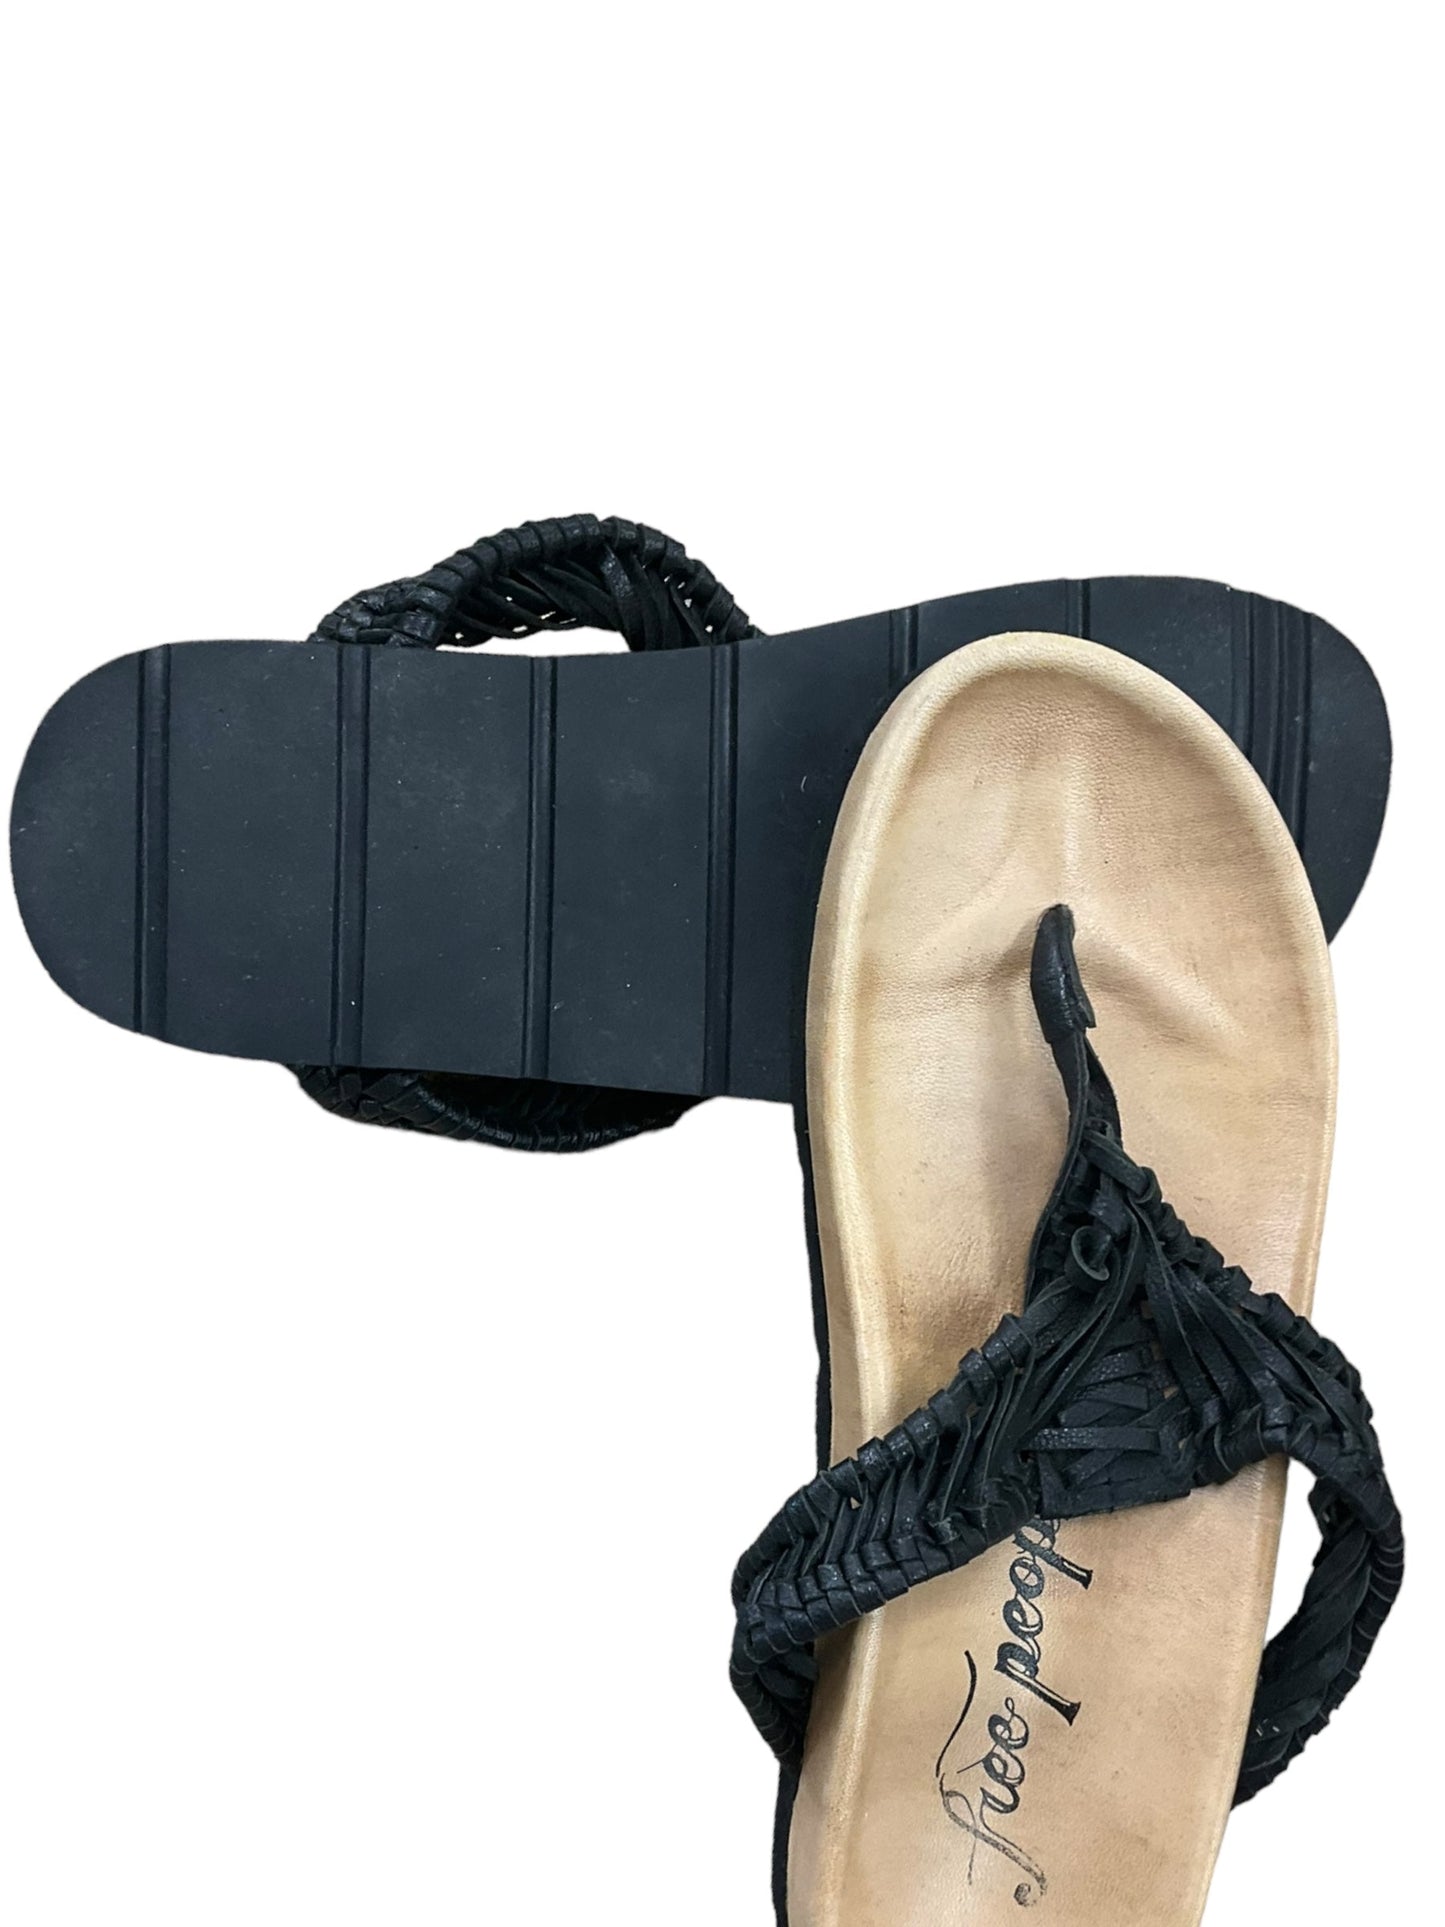 Black Sandals Flip Flops Free People, Size 6